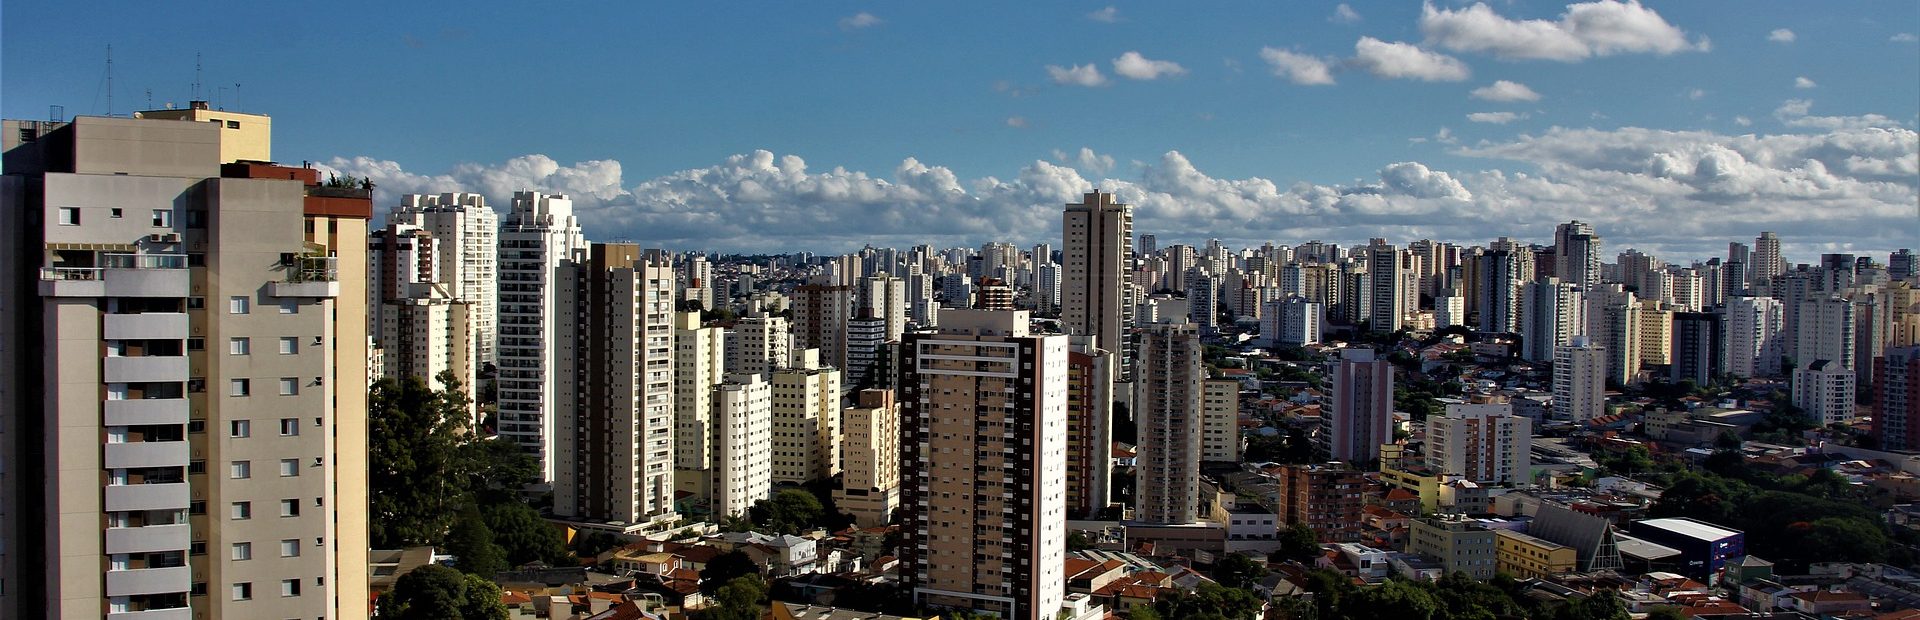 city view of Sao Paulo Brazil